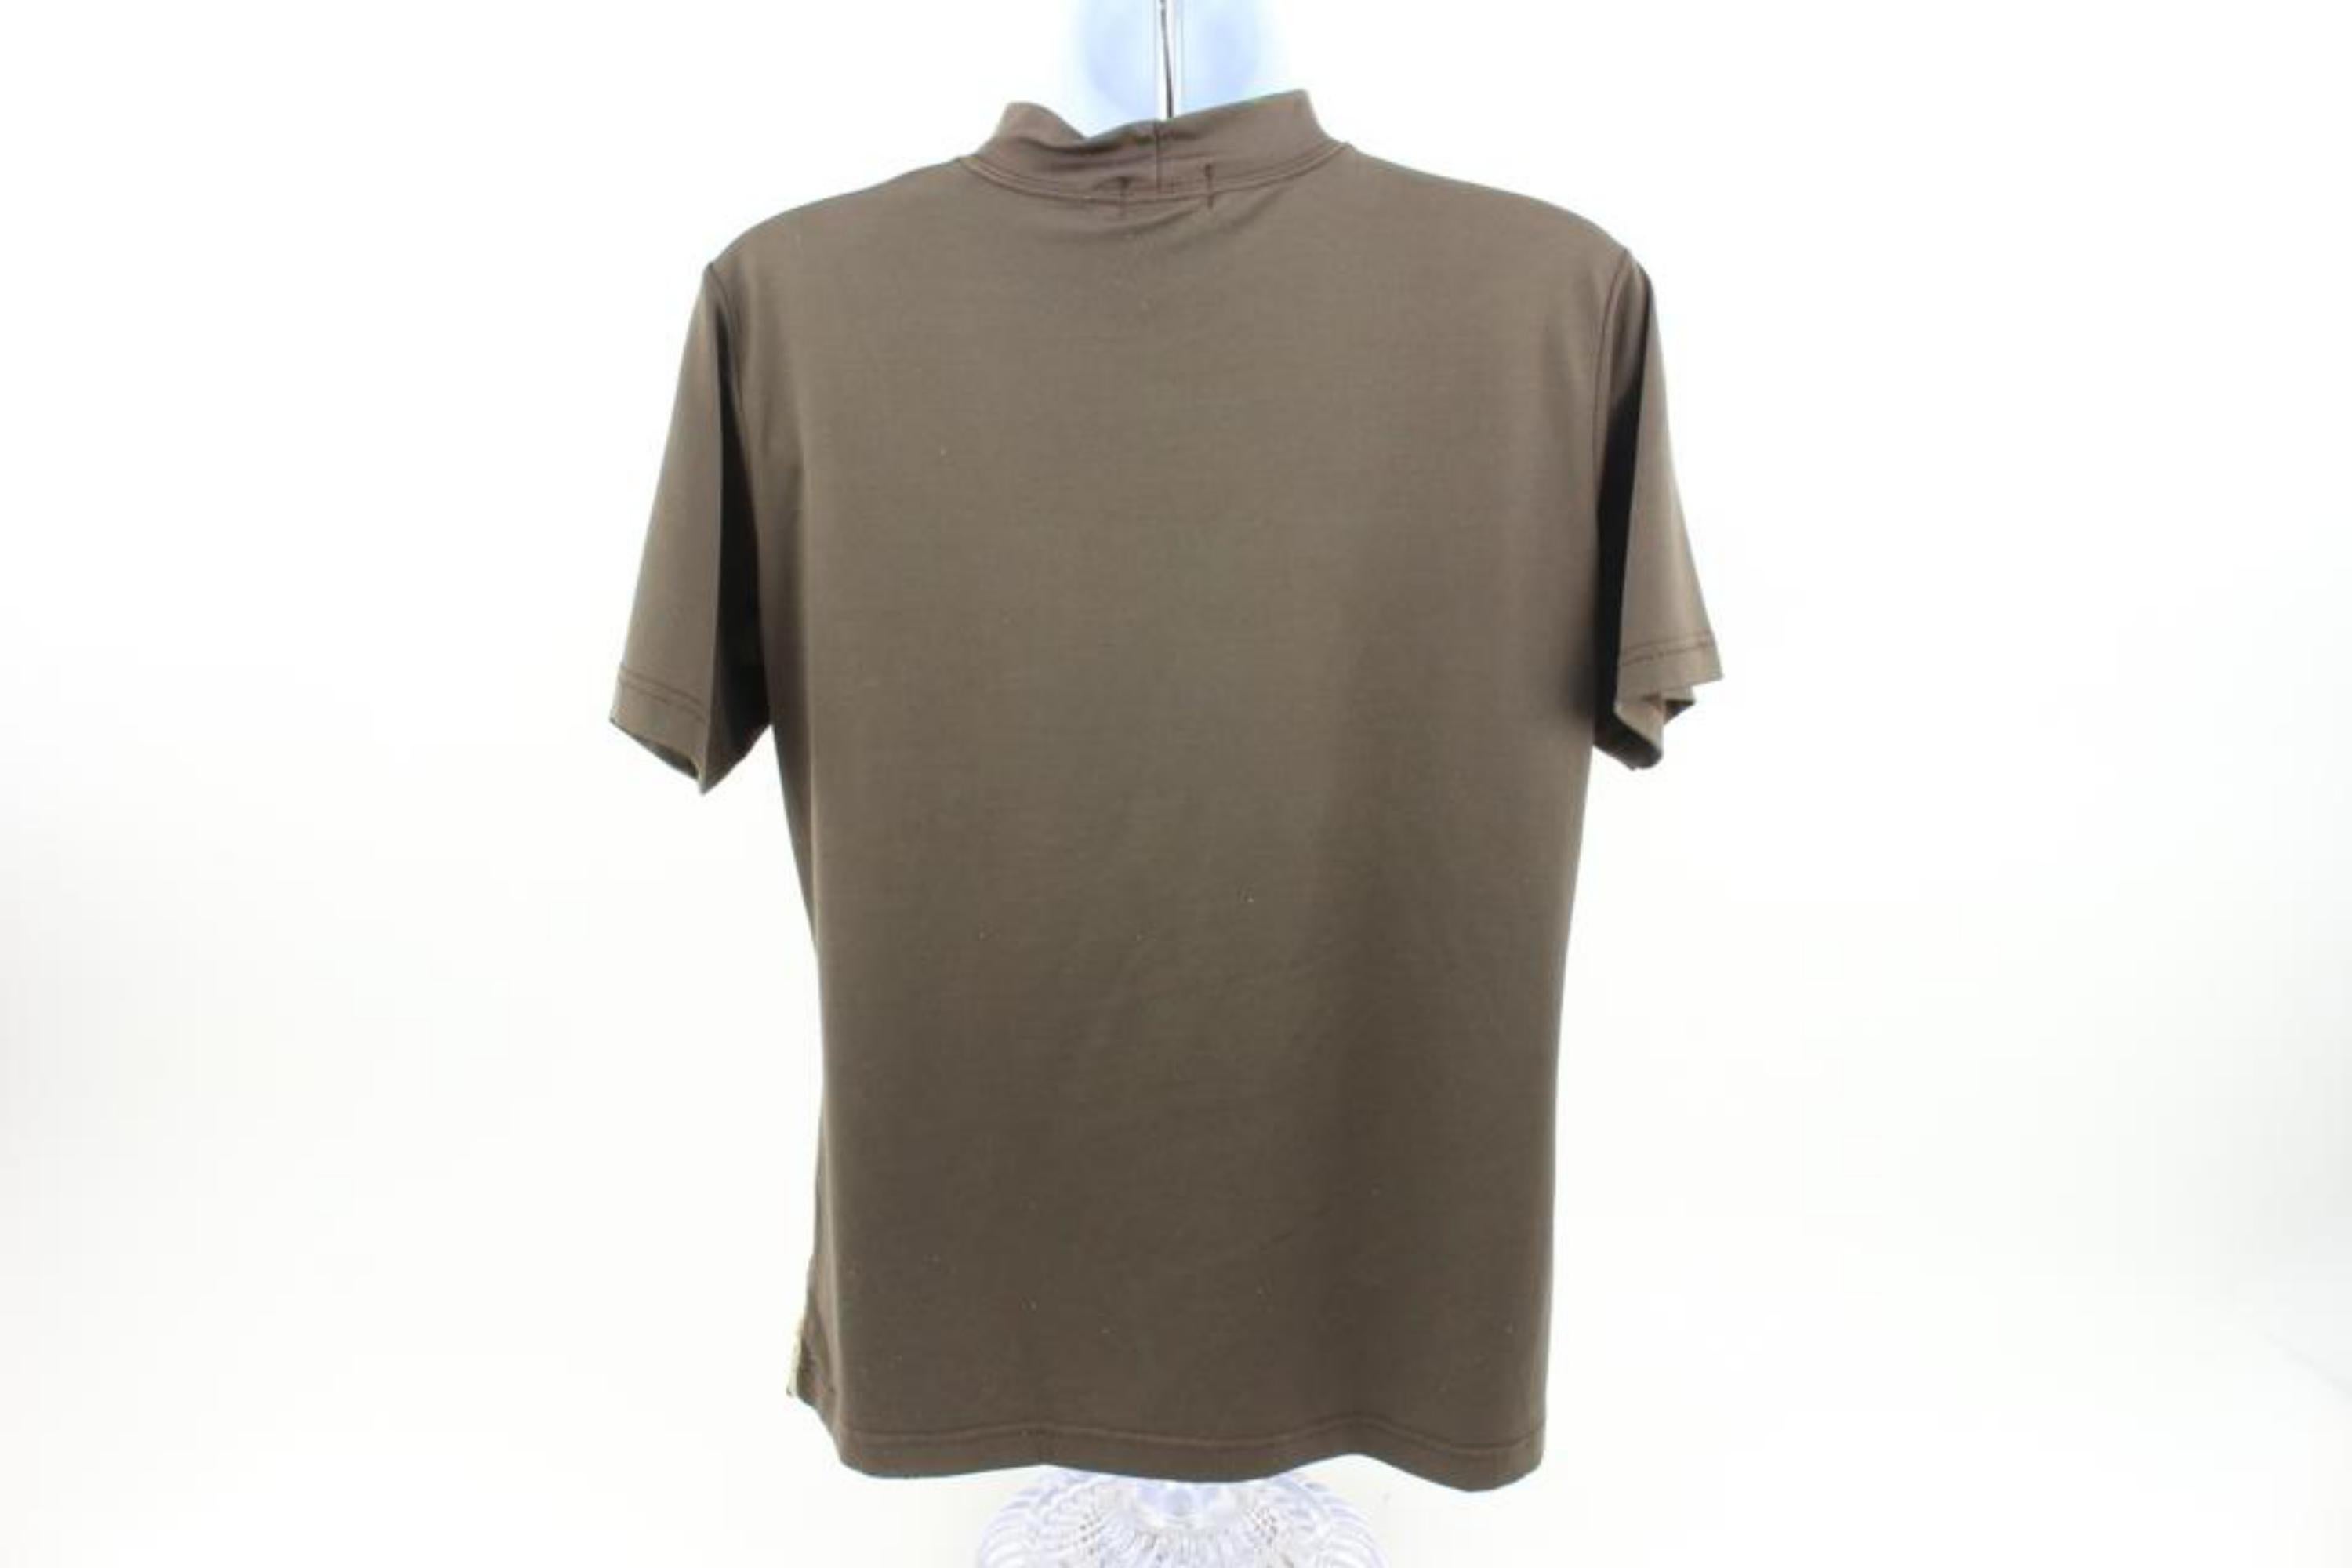 Hermès Rare Brown x Khaki Green Gender Fluid Map T-Shirt Tee Shirt 121h34 For Sale 3